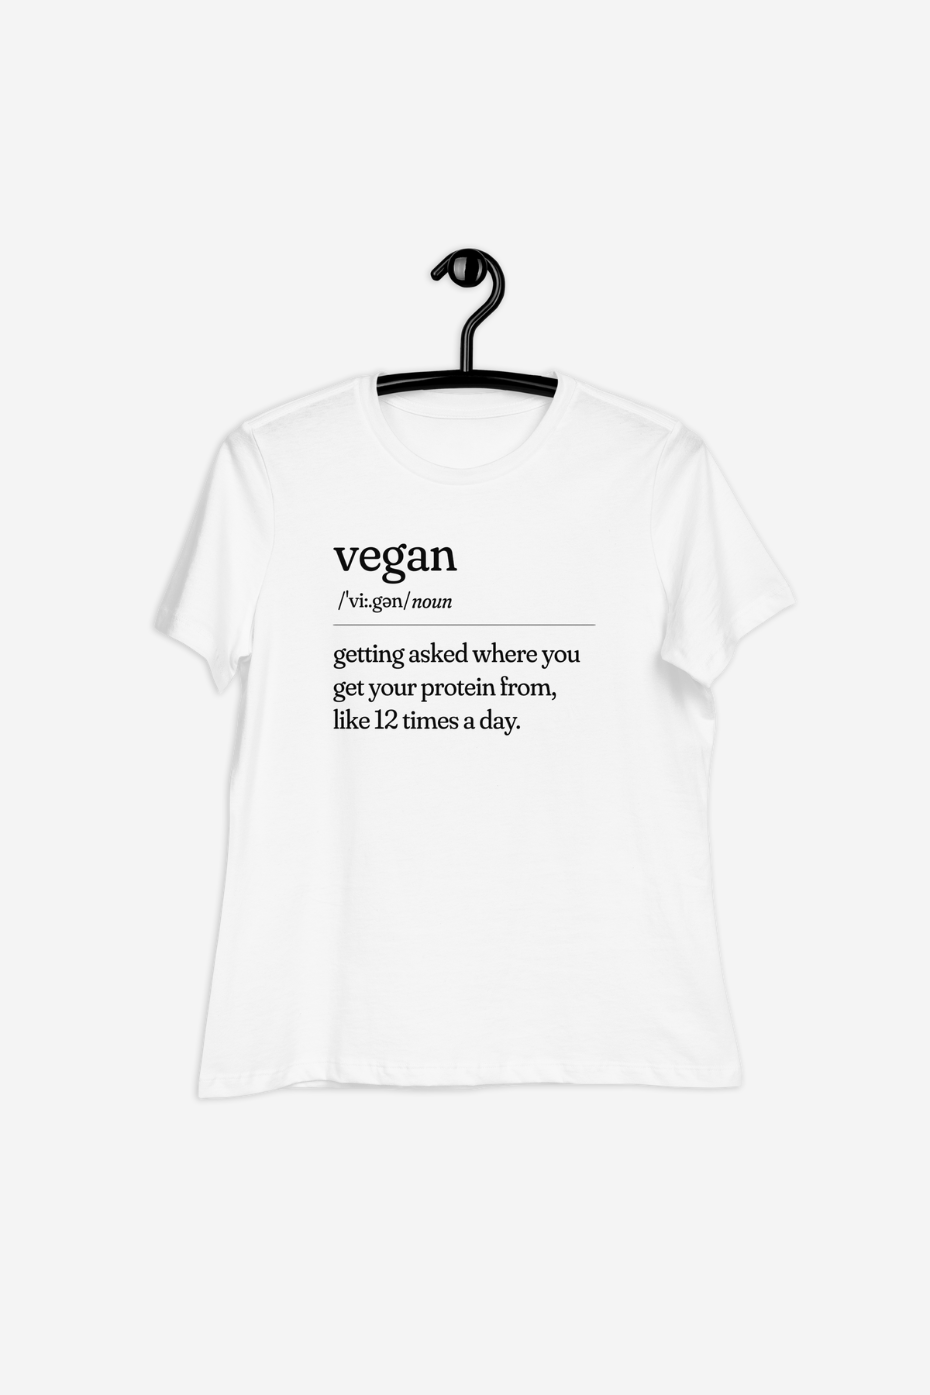 Vegan Meaning Women's Relaxed T-Shirt